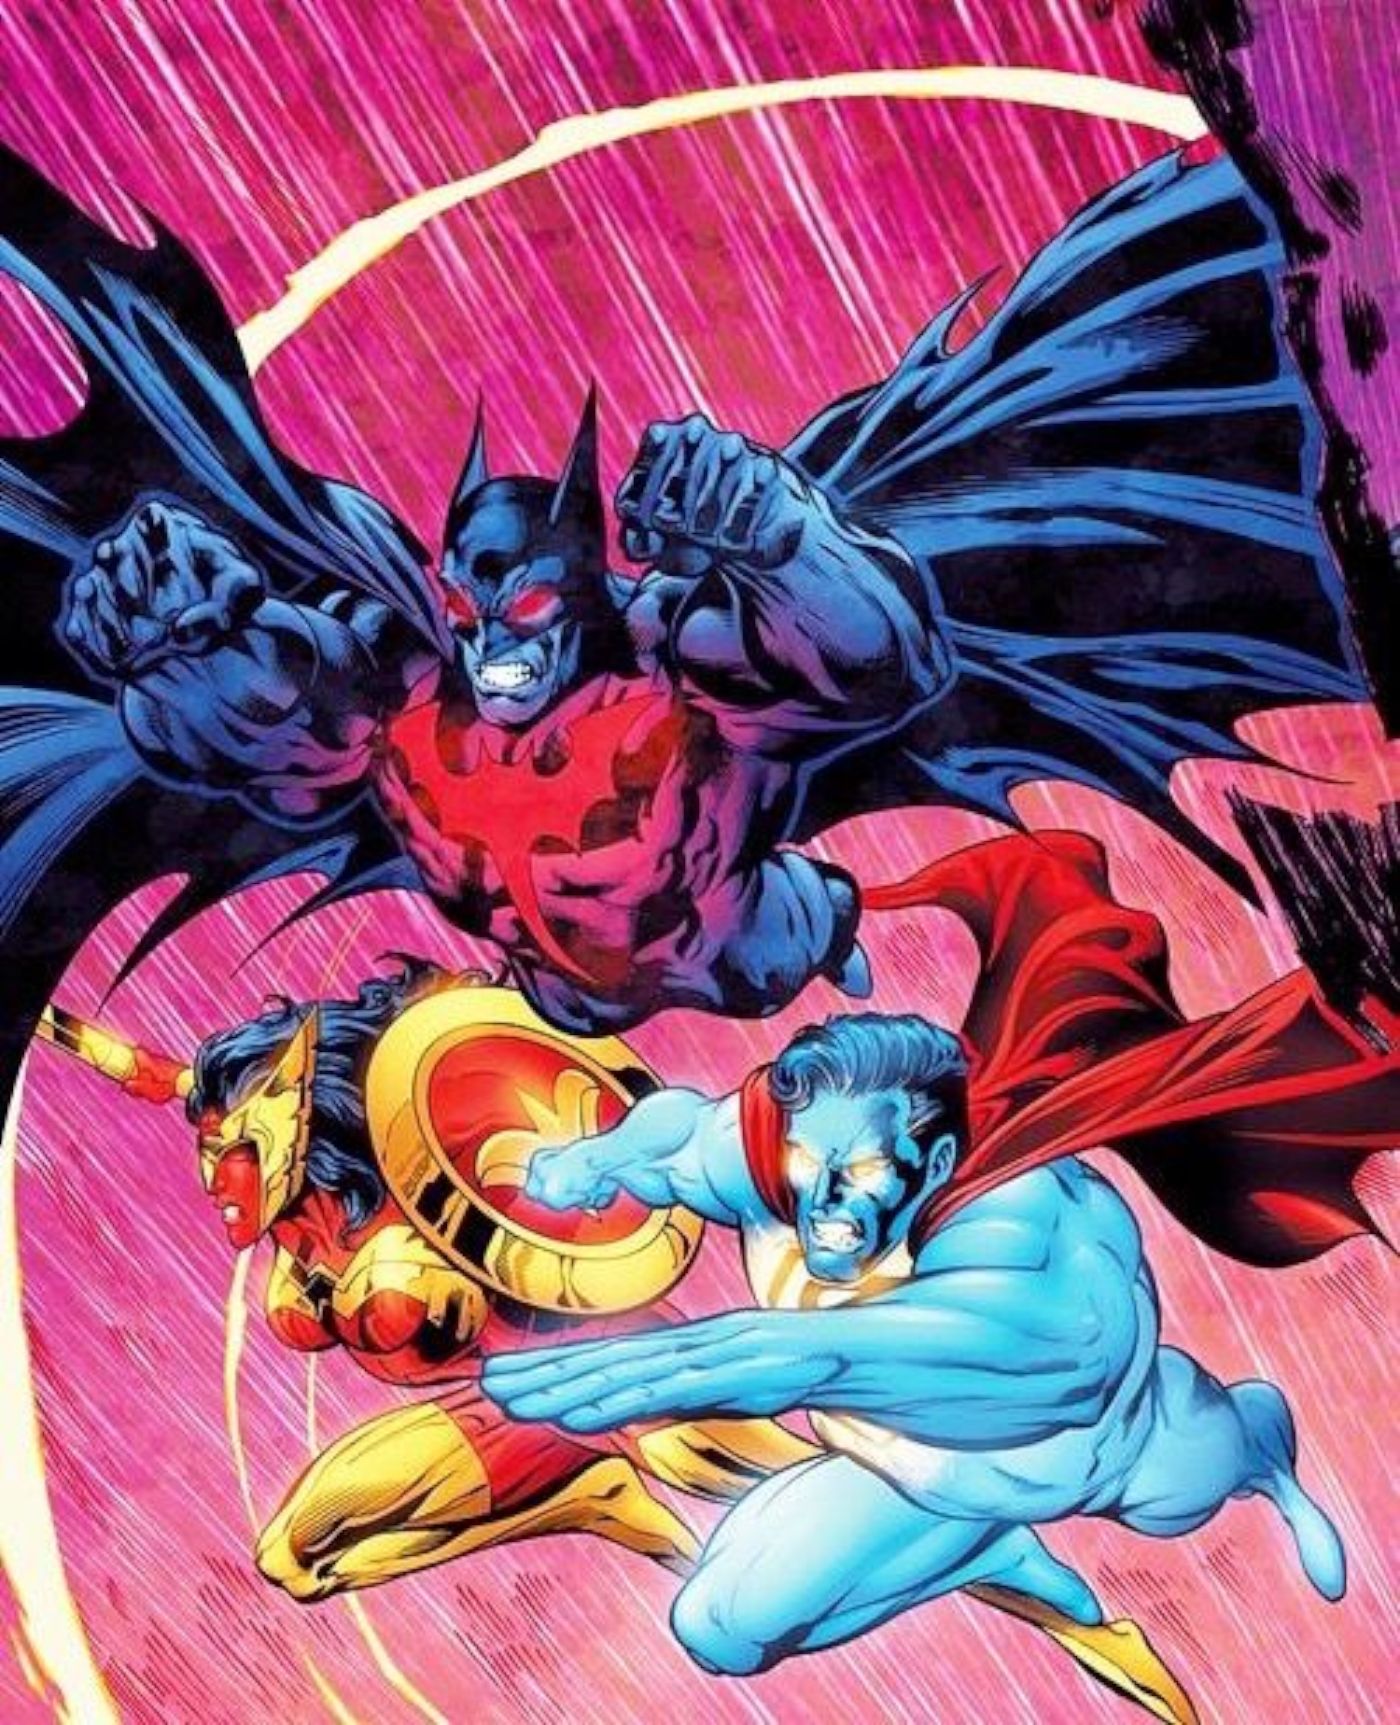 Comic book panel: Batman Became The God Atmahn alongside other dark gods based on Superman and Wonder Woman.